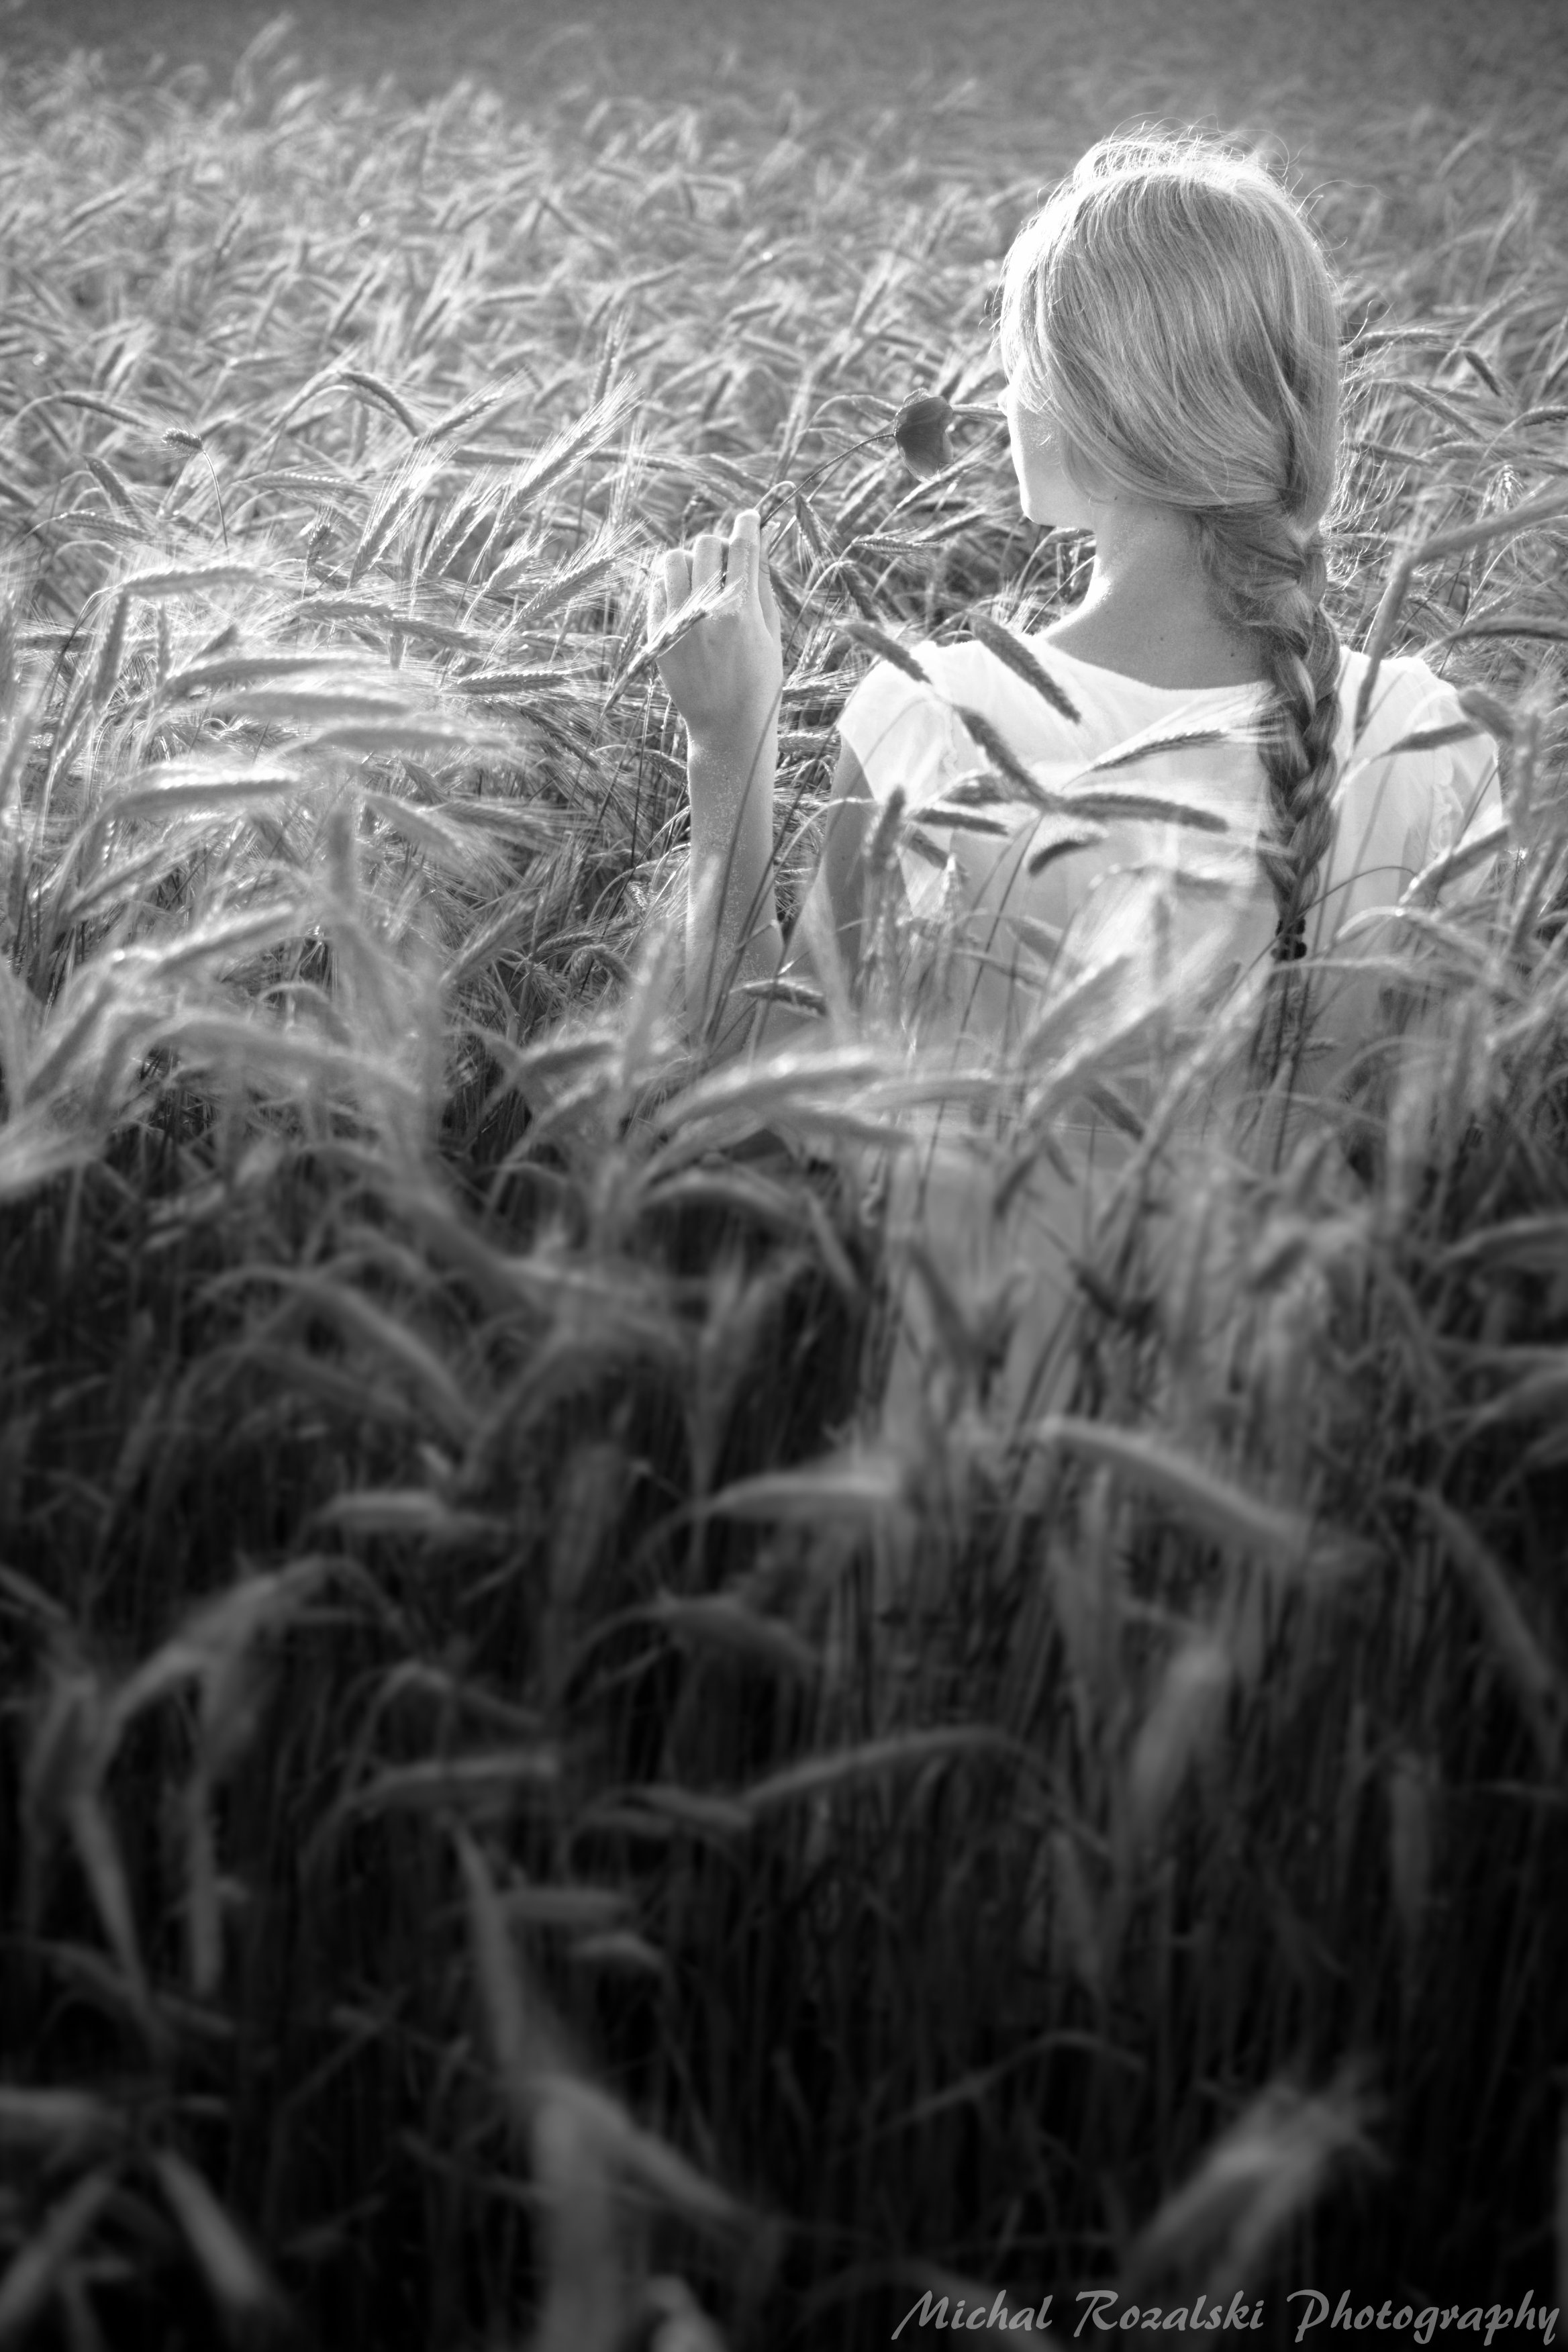 blackandwhite, ,girl, ,fields, ,crops, ,harvest, ,artistic, ,portrait, ,, Michal Rozalski